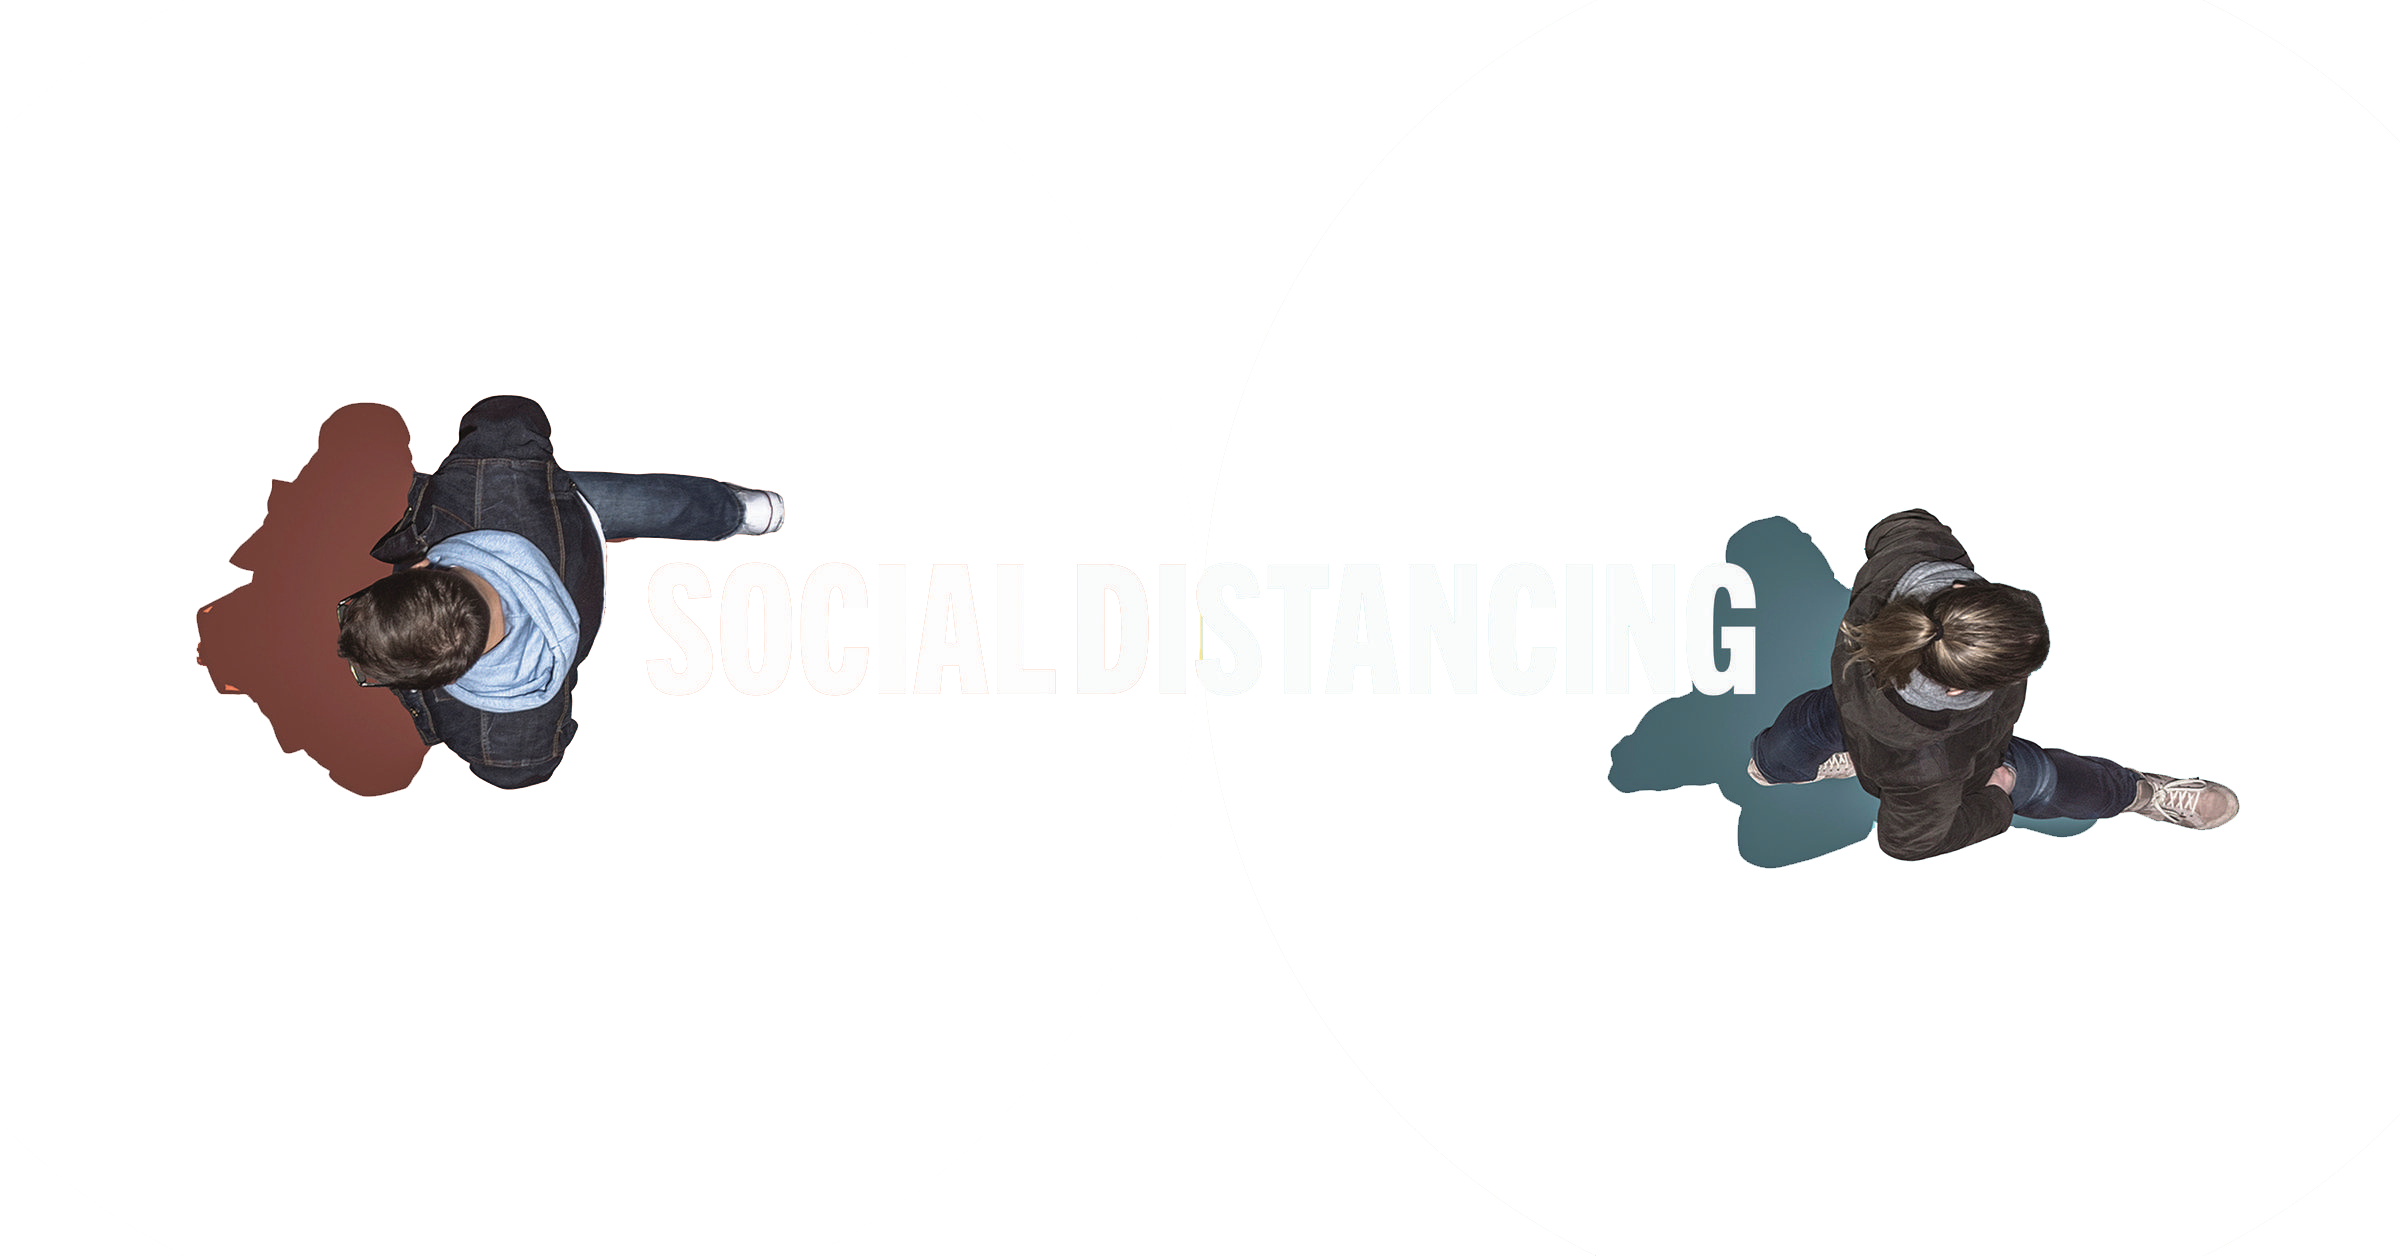 Social Distancing Download PNG Image